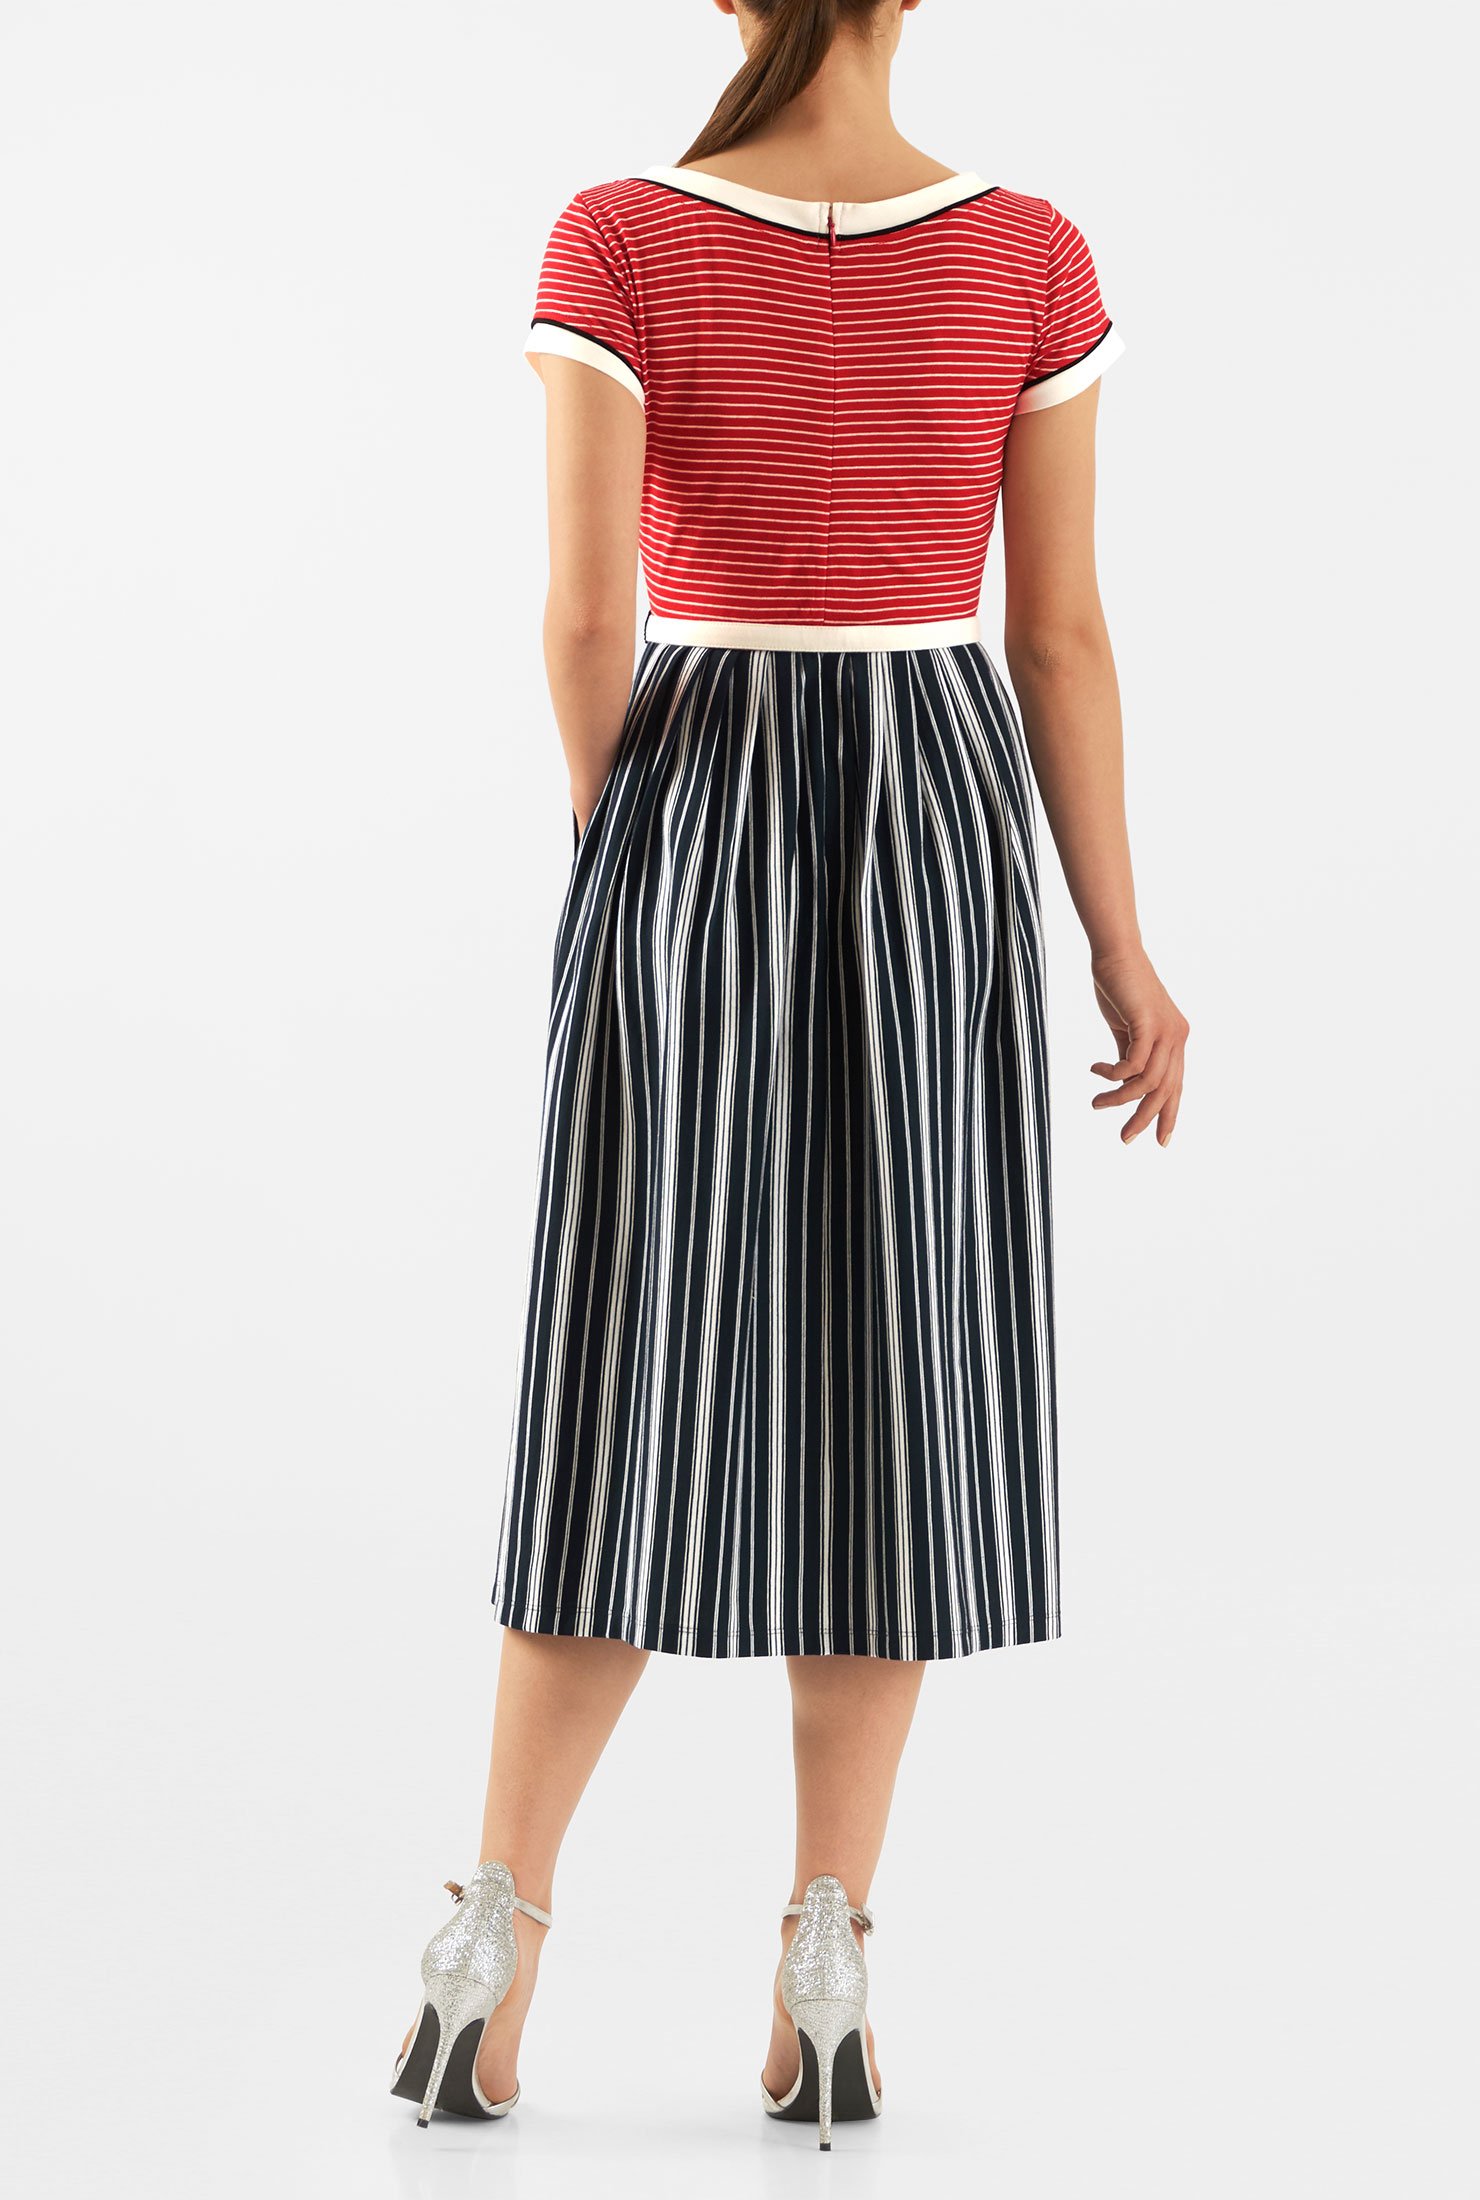 Shop Mixed stripe cotton knit belted midi dress | eShakti